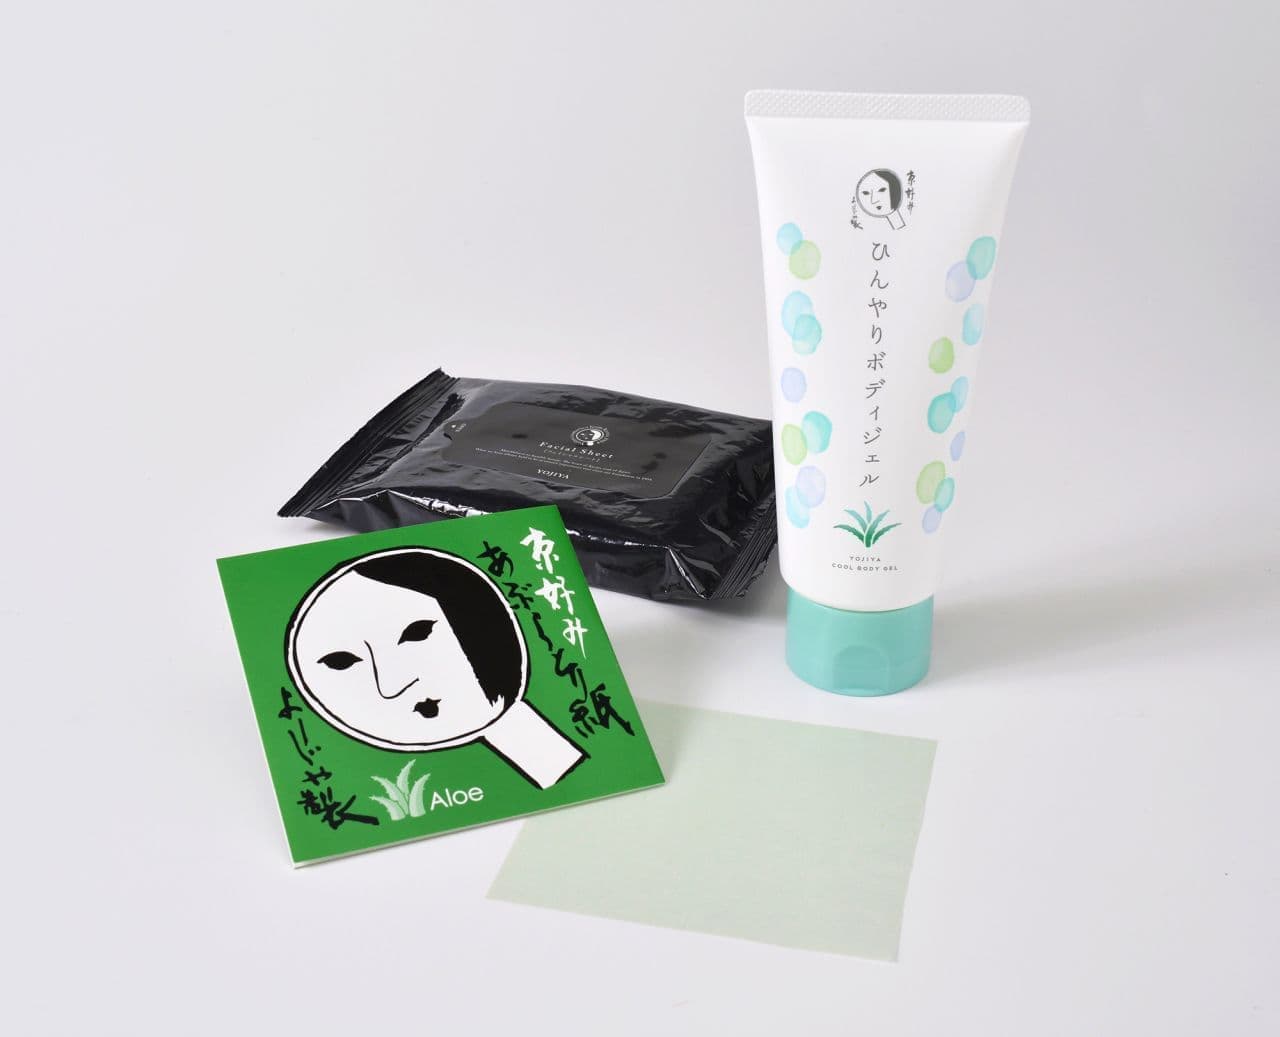 Yojiya "Chilly Body Gel", "Refresh Facial Sheet", "Aburatori Paper Aloe